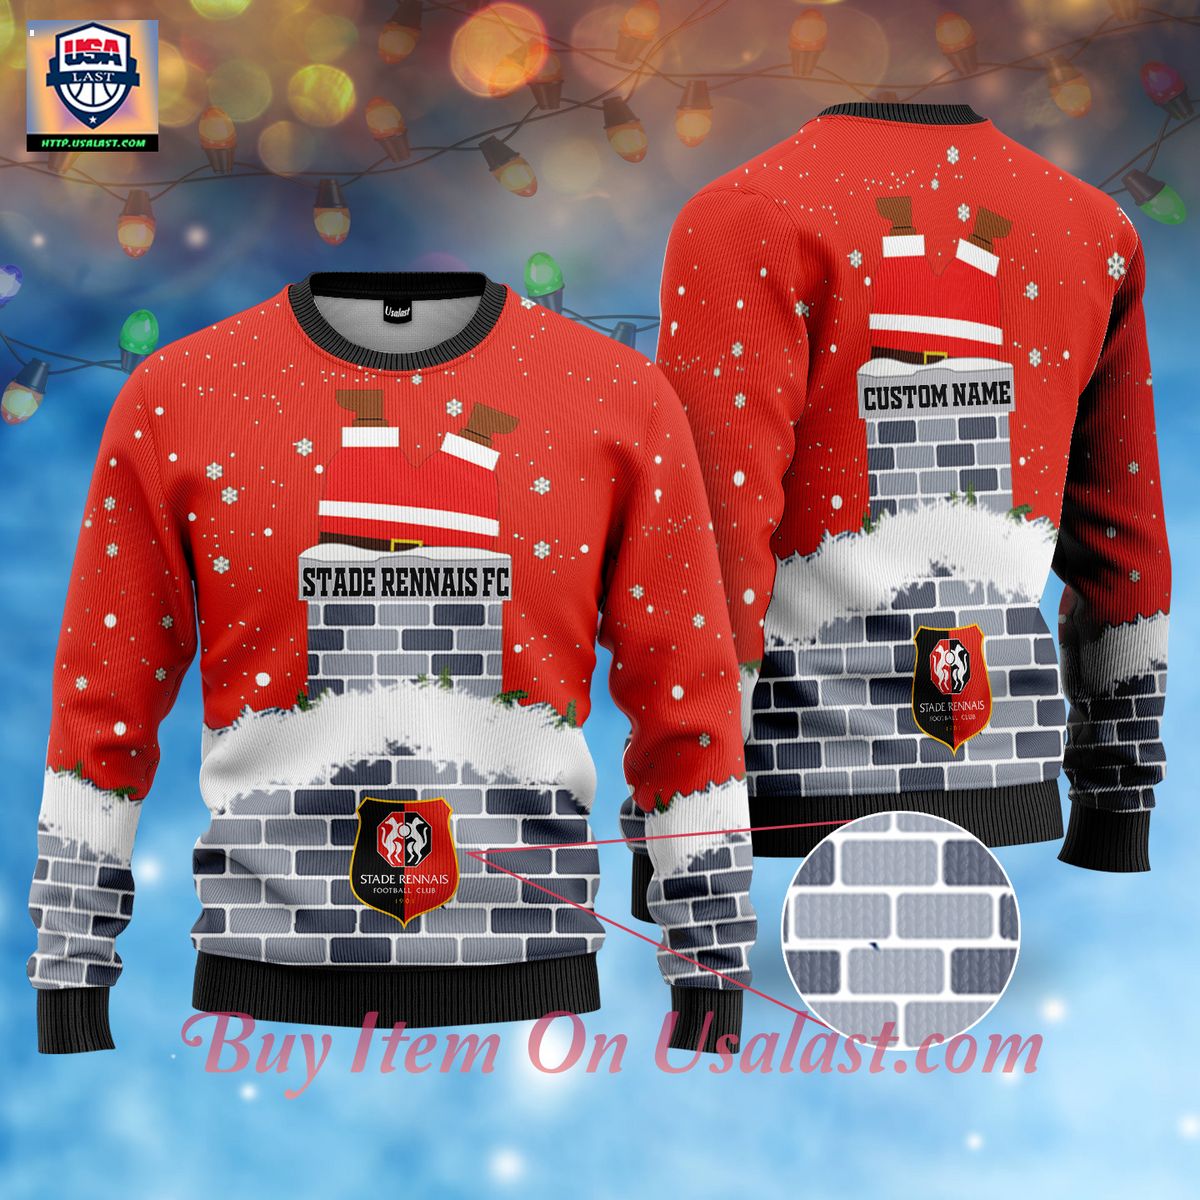 stade-rennais-fc-santa-claus-custom-name-ugly-christmas-sweater-1-wM0w7.jpg